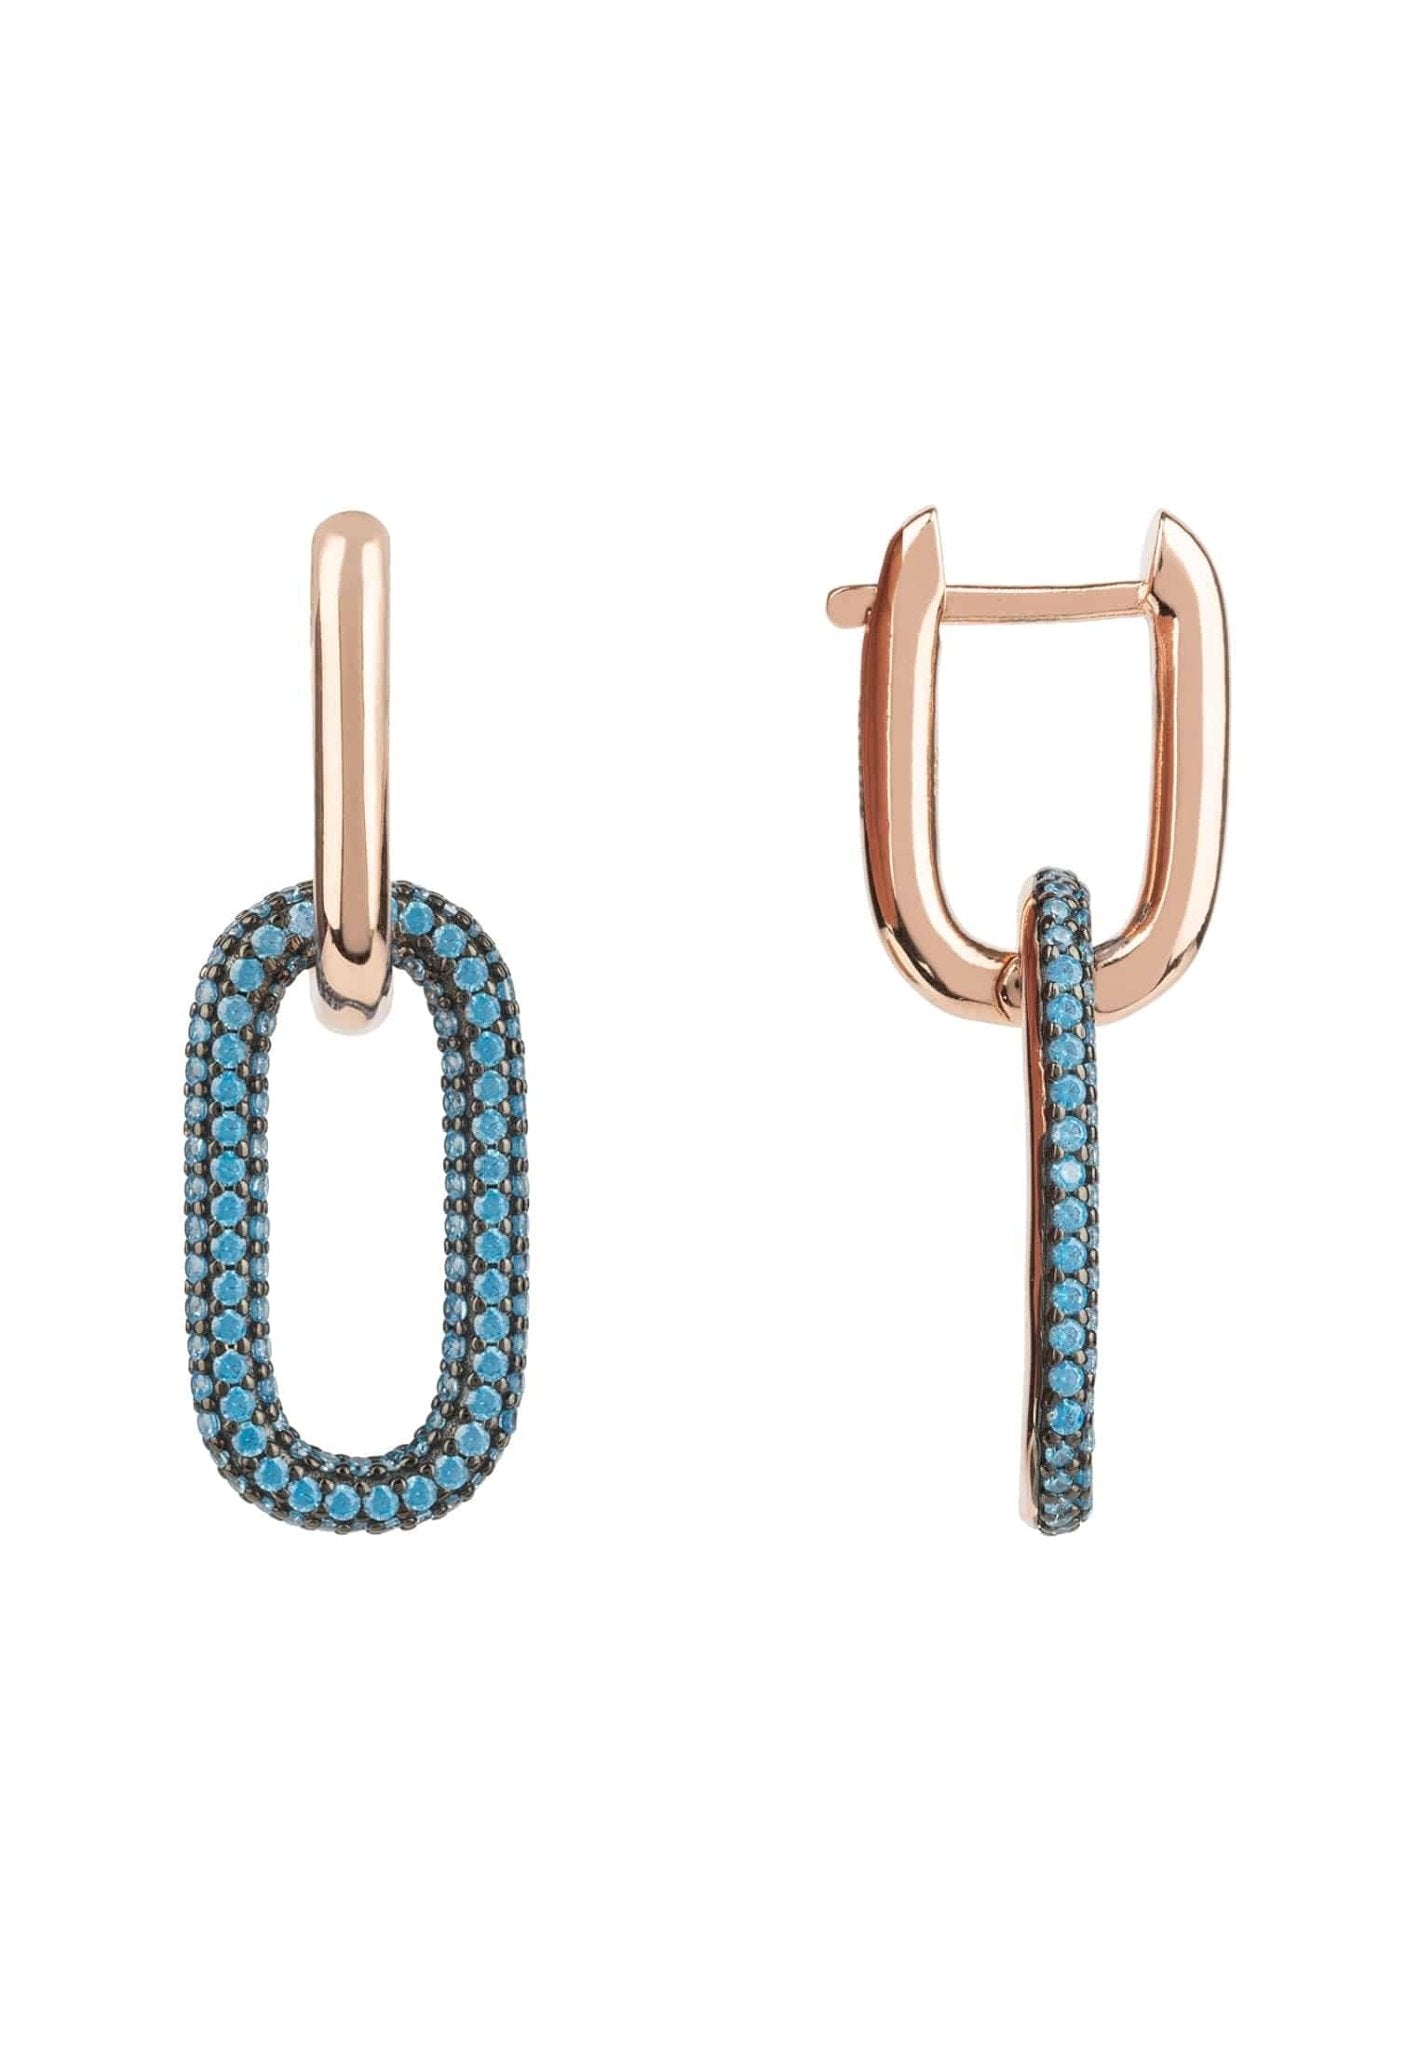 Chain Link Earrings Turquoise Blue Rosegold - LATELITA Earrings